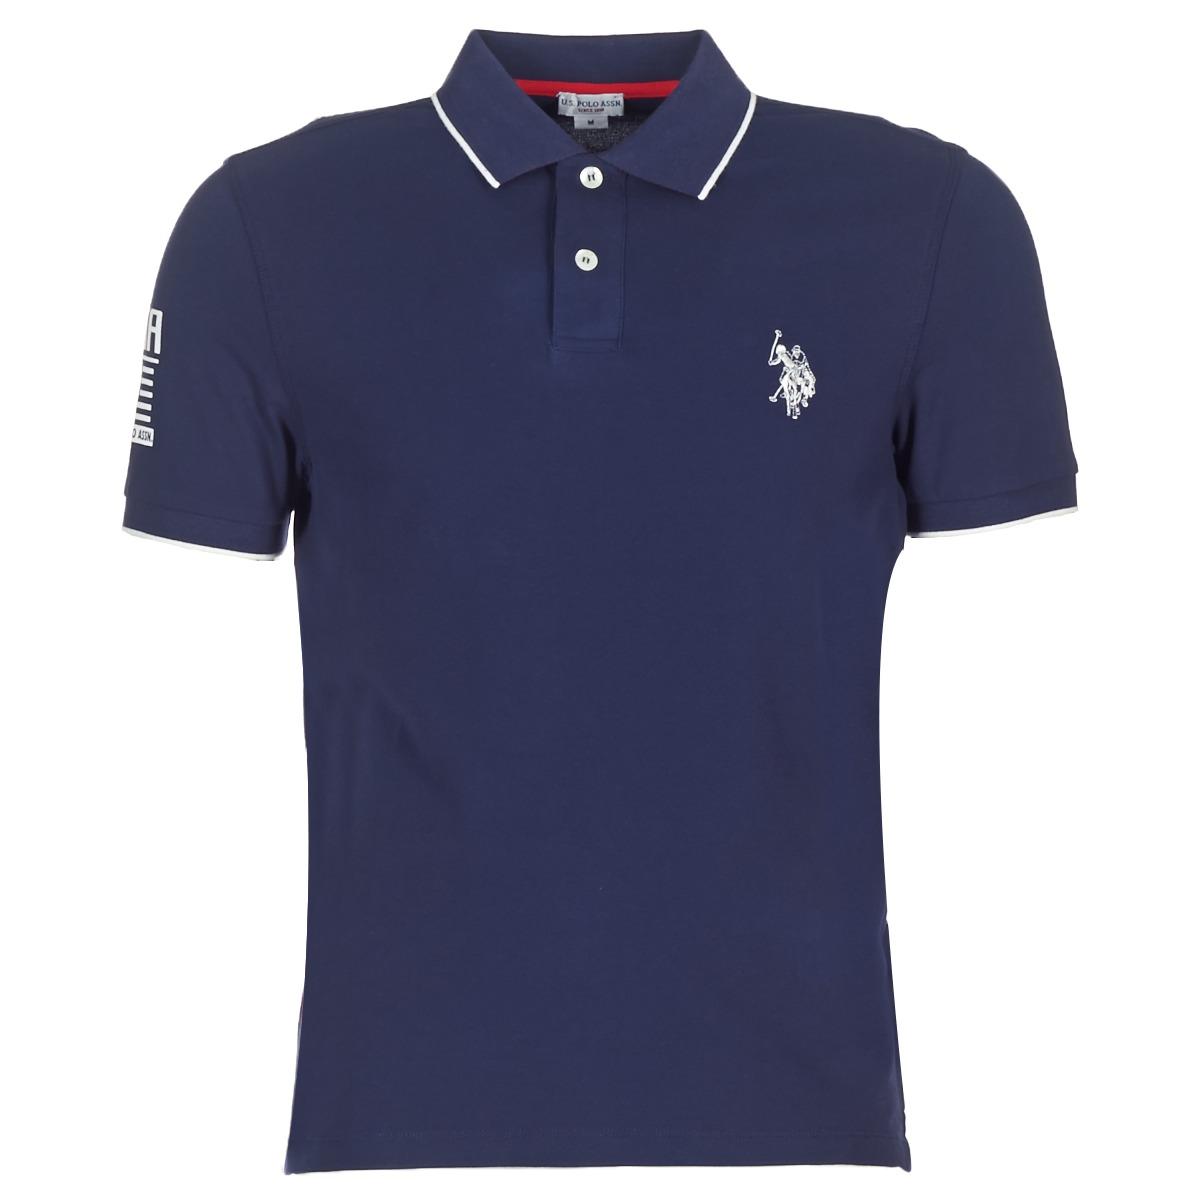 U.S. POLO ASSN. Uspa Sport Logo Polo Shirt in Blue for Men - Lyst